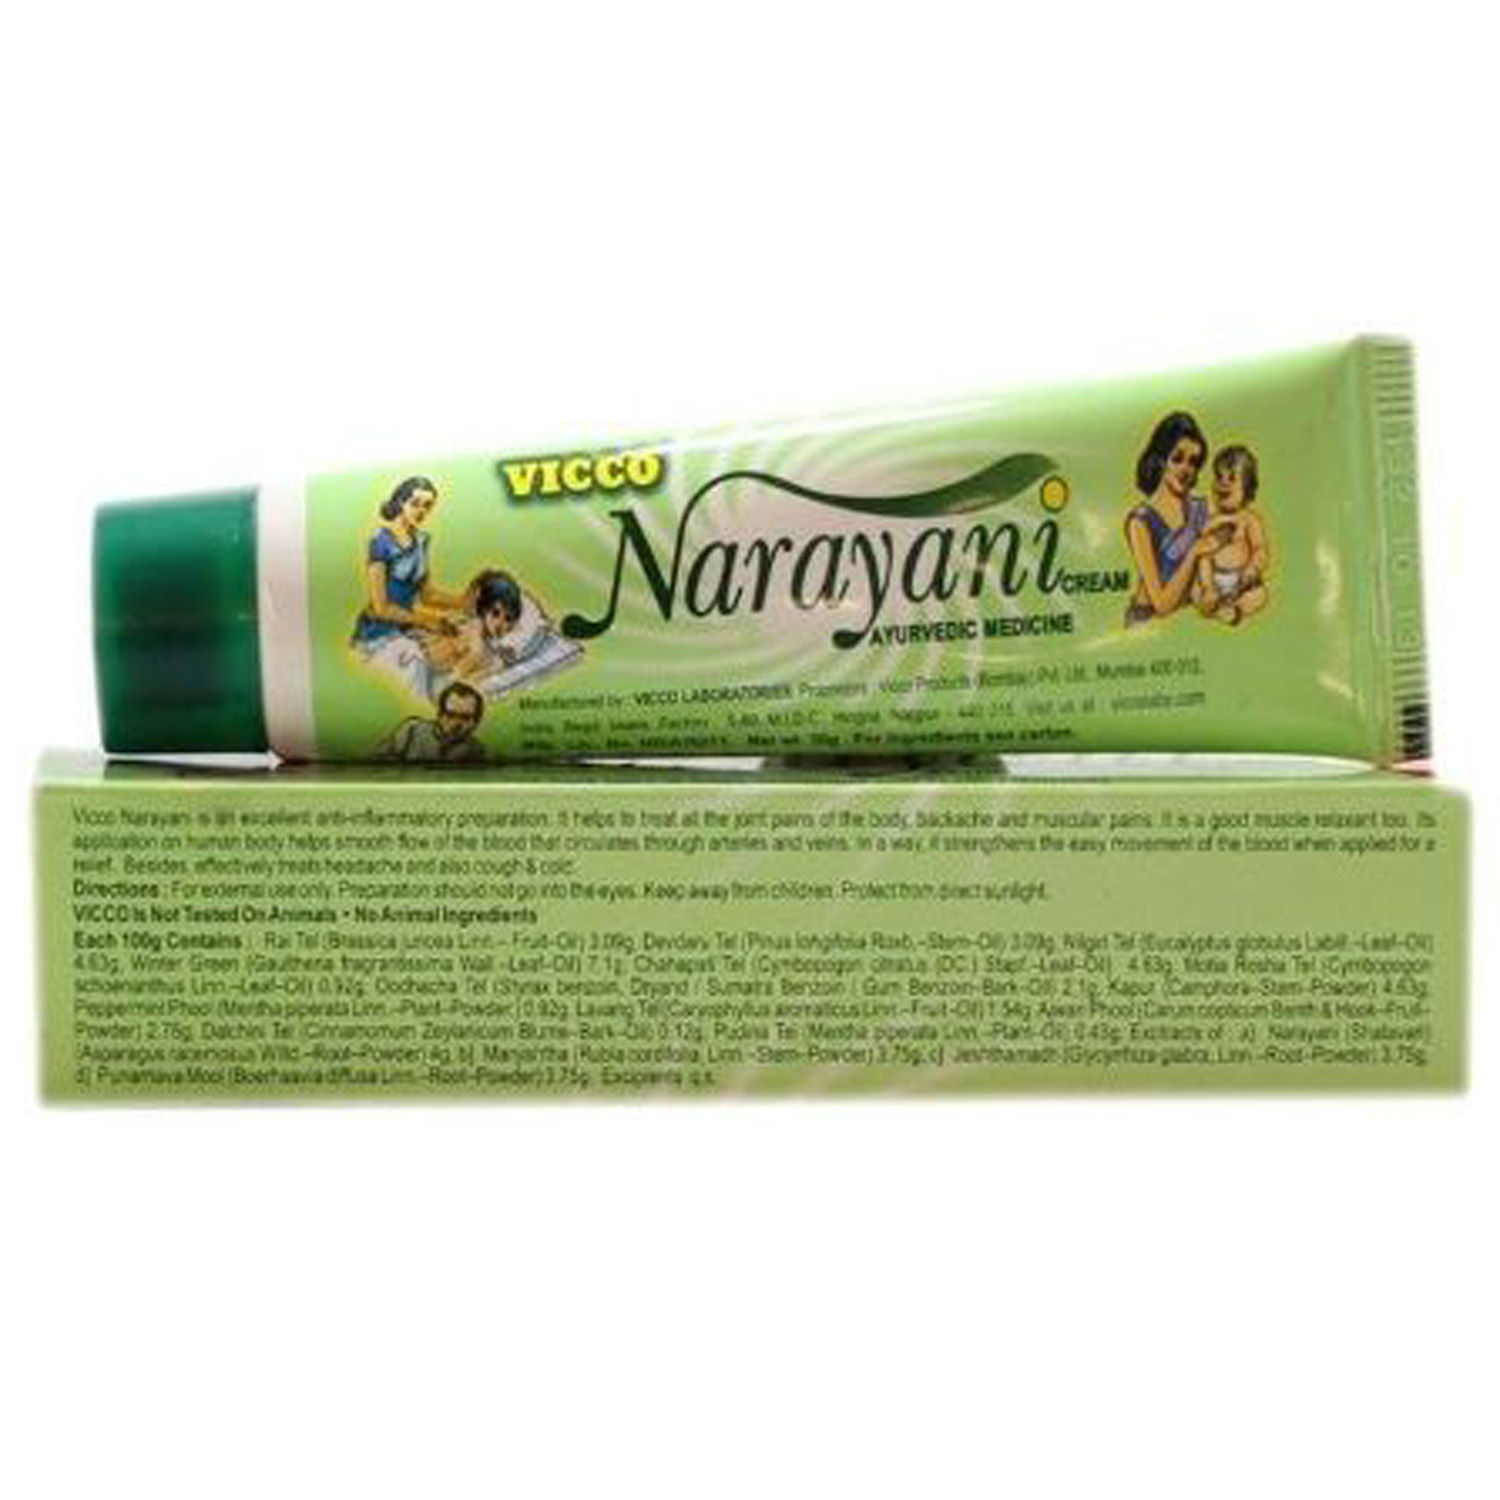 Vicco Narayani Cream, 15 gm, Pack of 1 